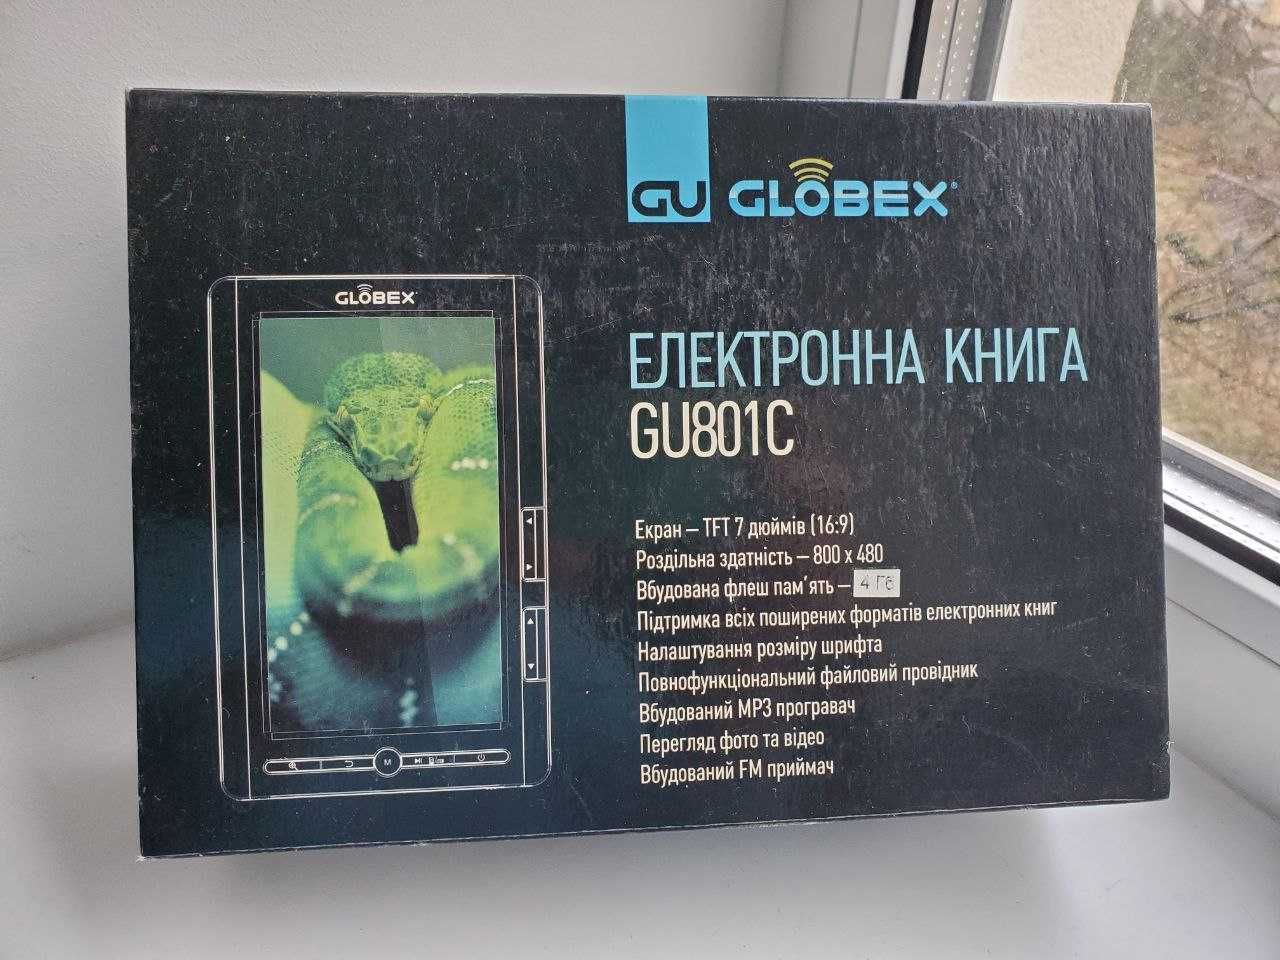 Електронна книга GU GLOBEX GU801C